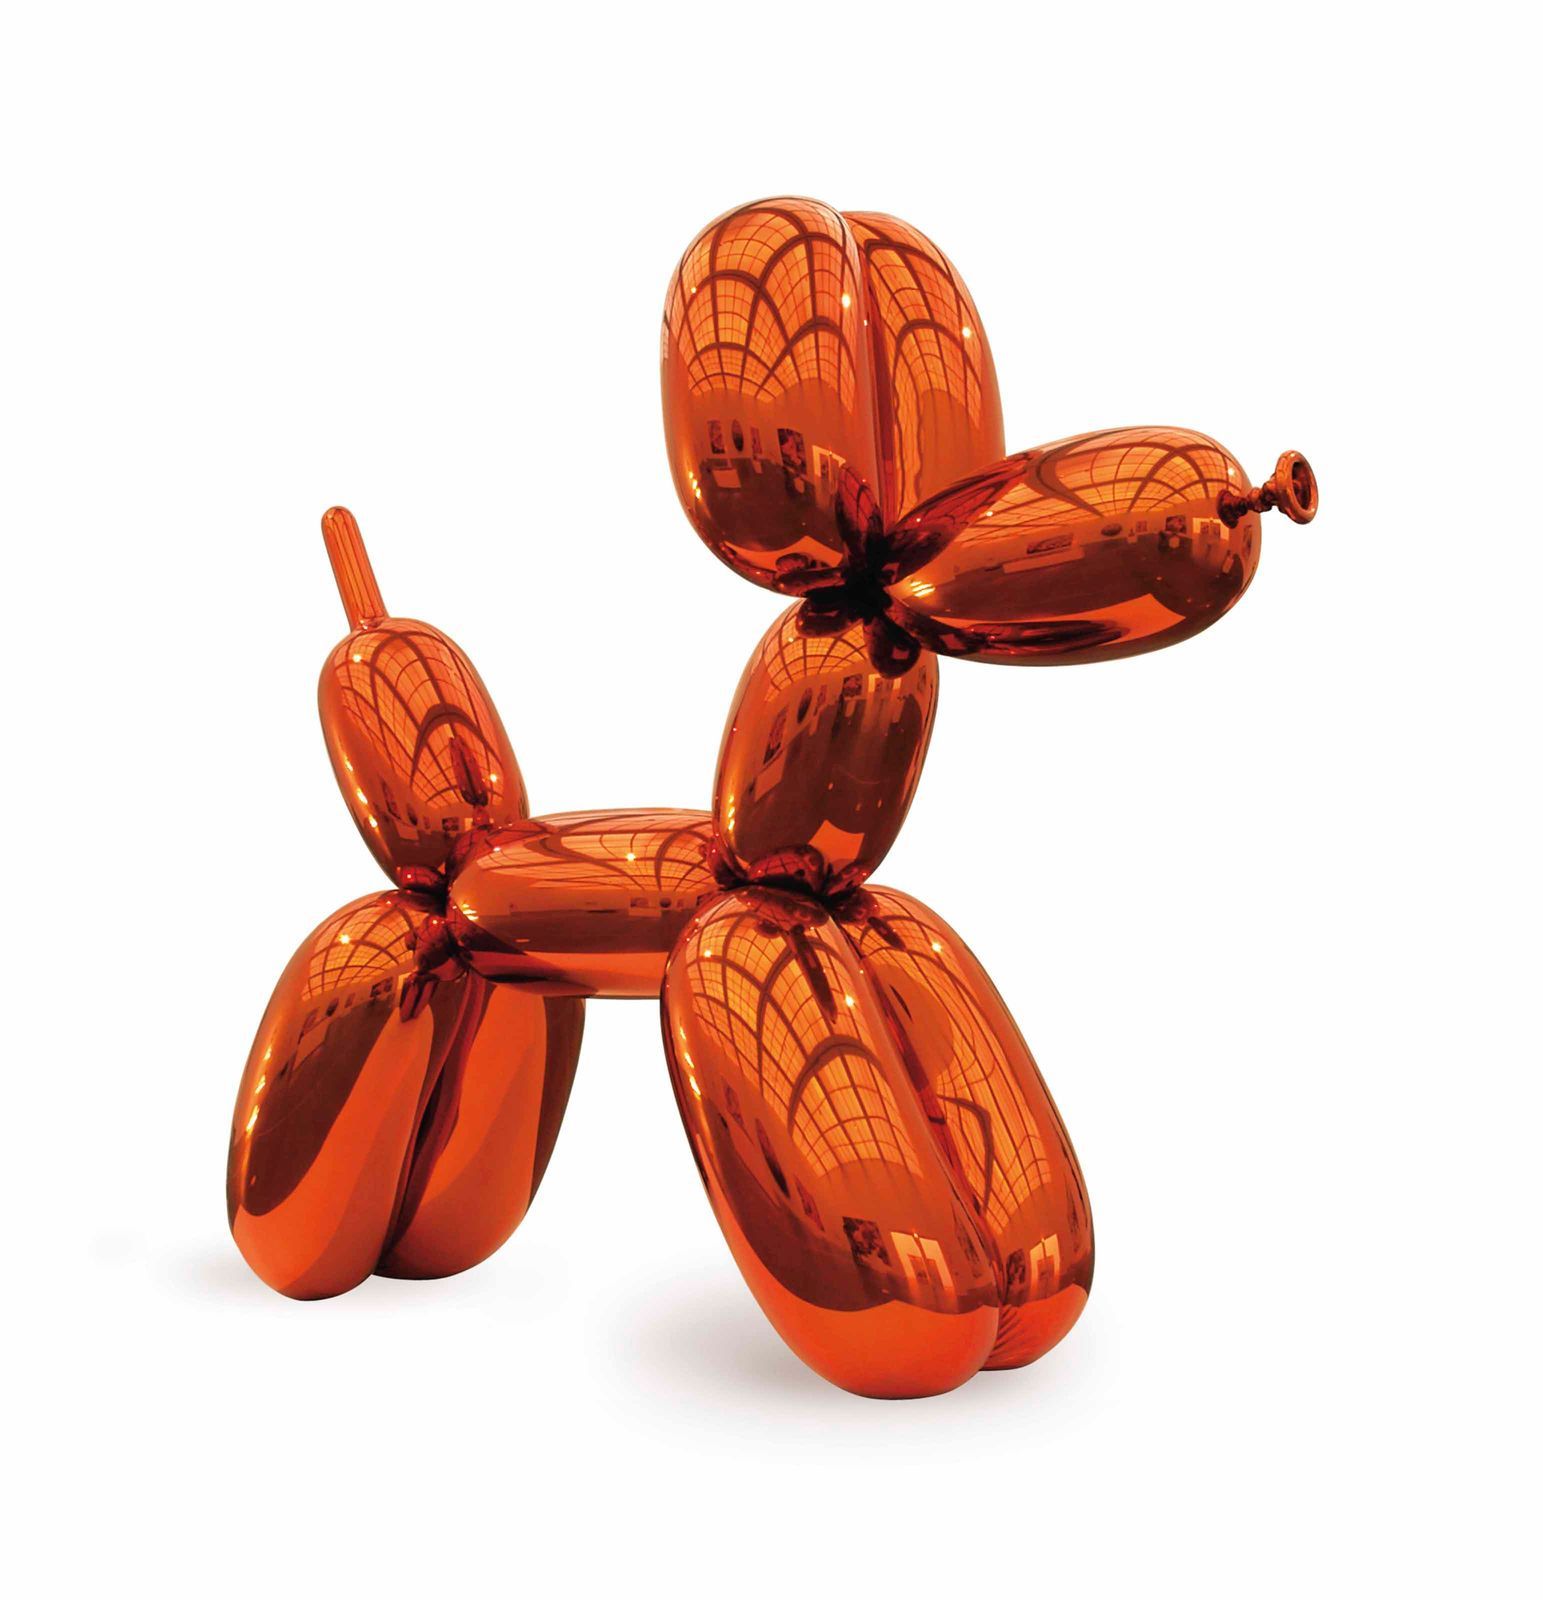 Jeff Koons: Balloon Dog (Orange)